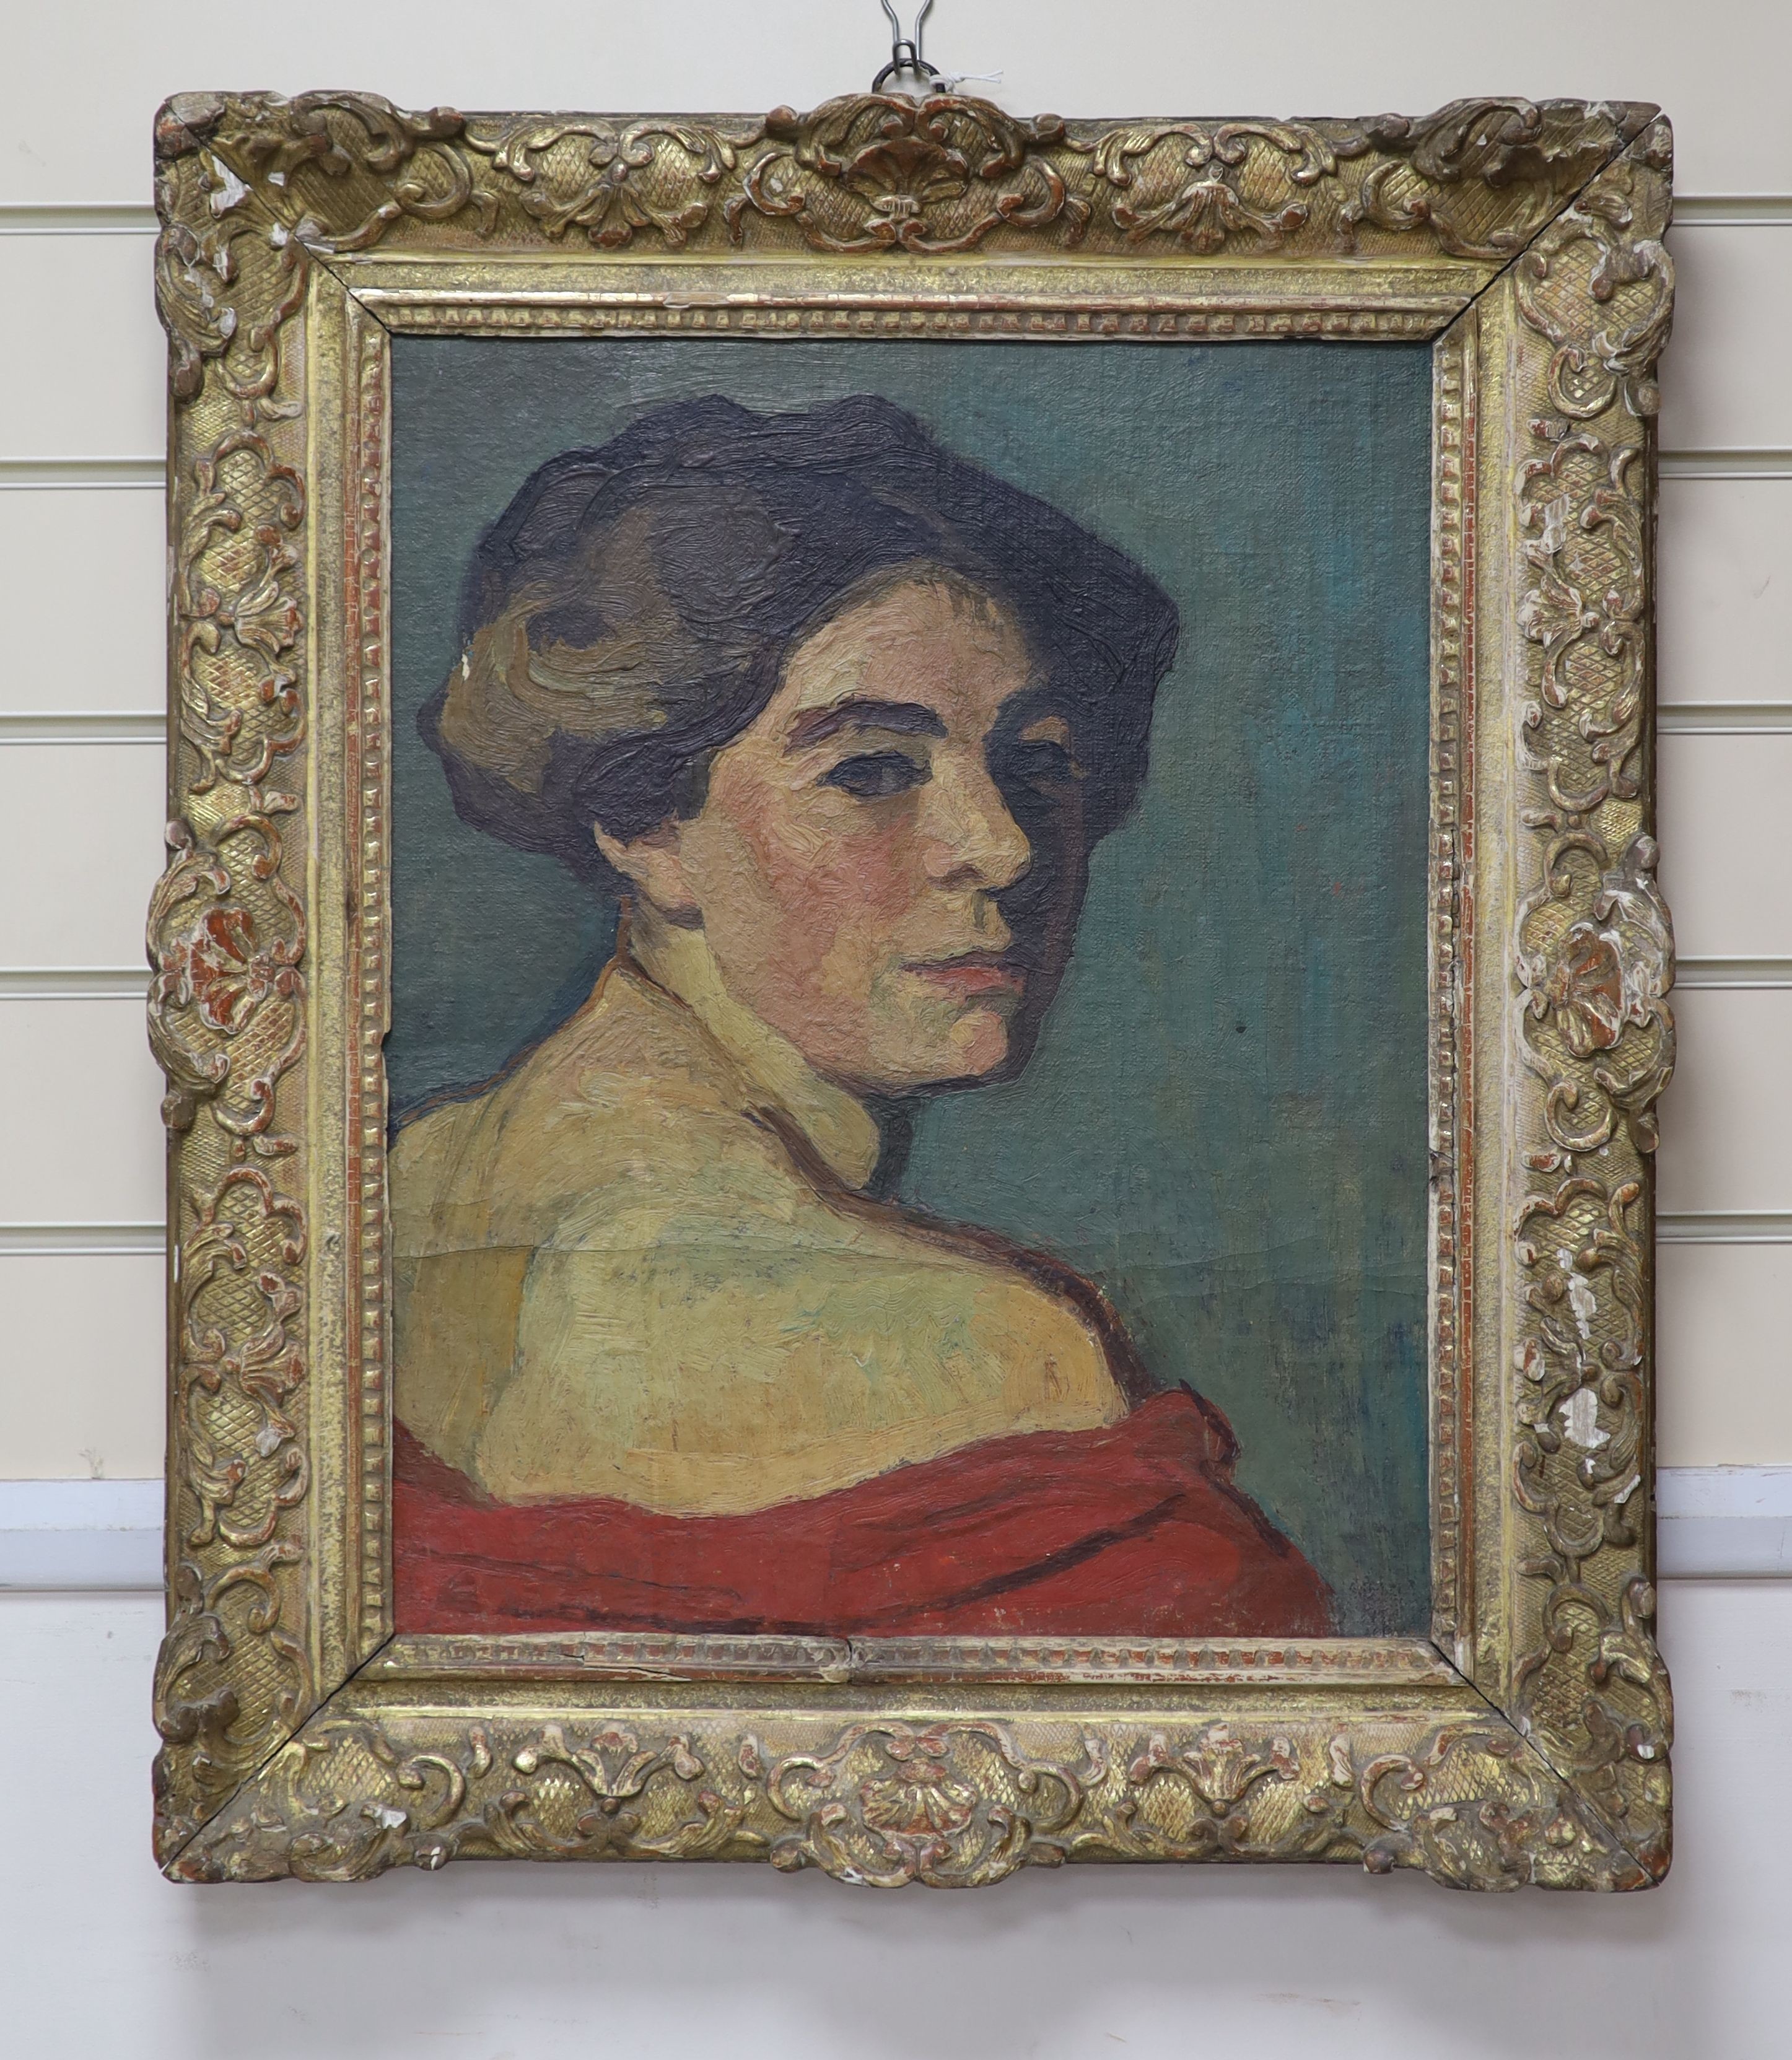 Bernheim-Jeune Gallery, oil on canvas, portrait of a lady